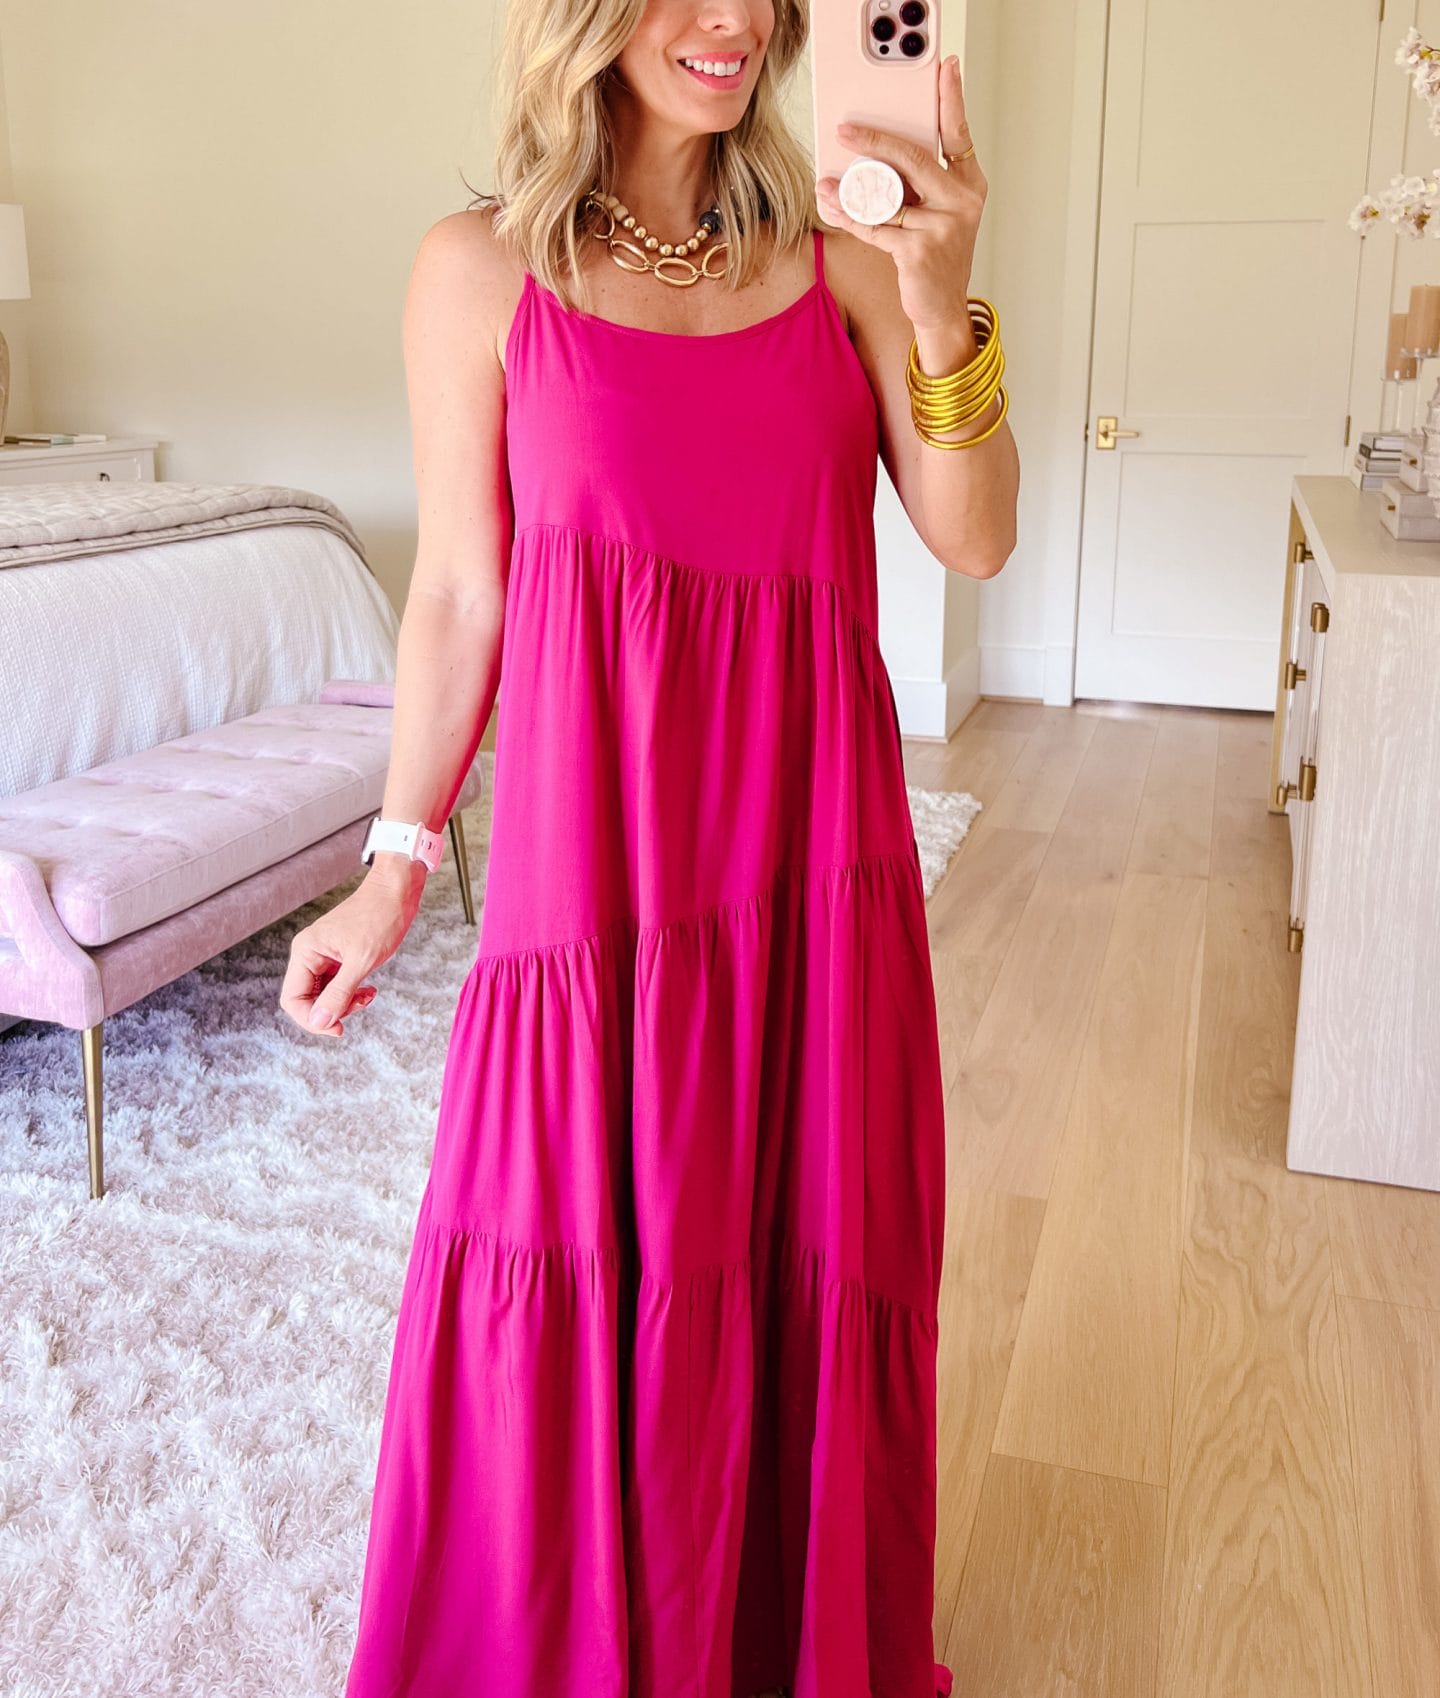 Tiered Pink Maxi Dress, Sandals 